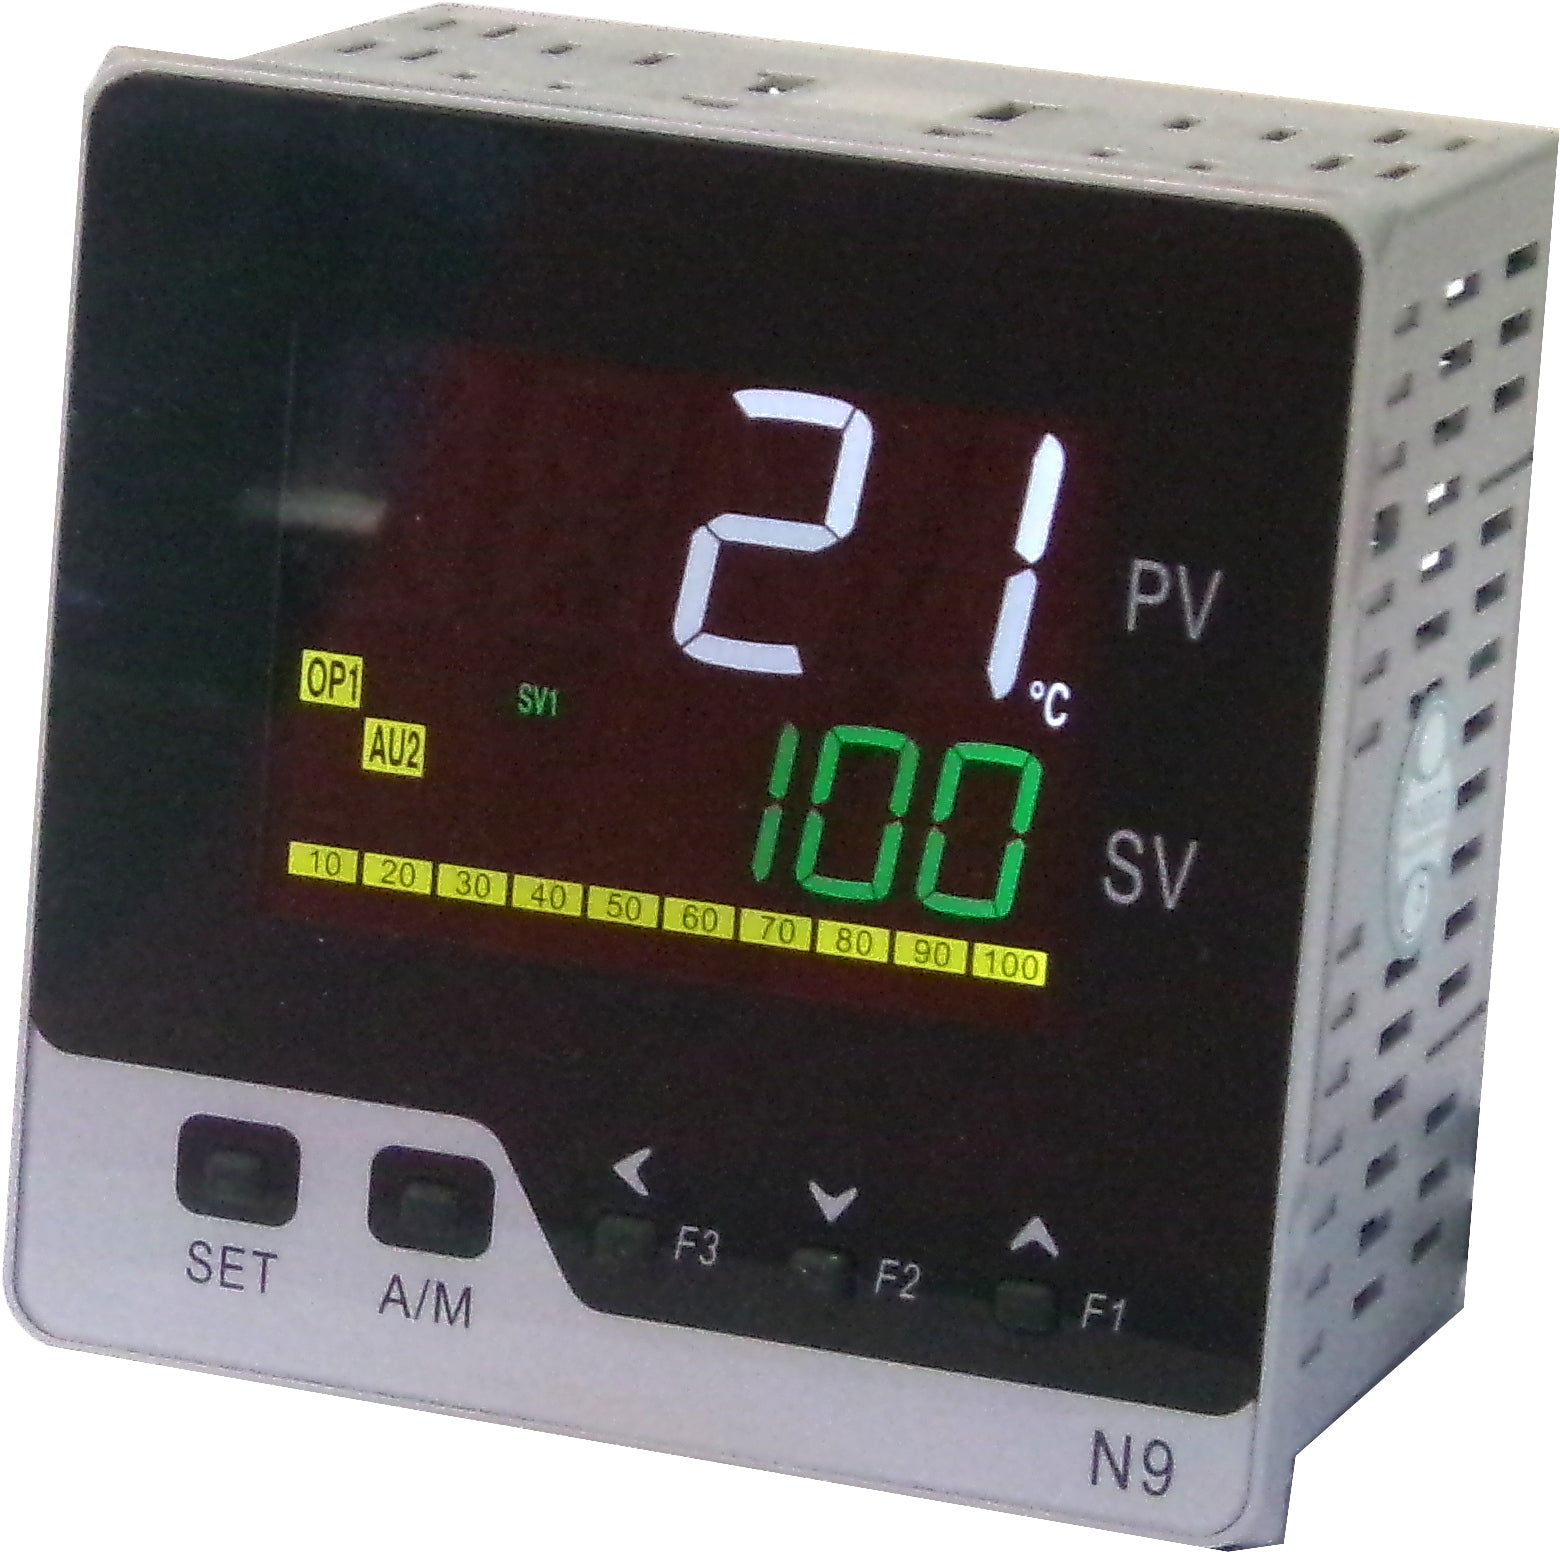 TX4L-U-E-N-1-96-A-N-N-N-N-N, Temp Controller, 96x96mm, 100-240VAC, Mutirange Input, 0-10V Output, 2 Alarms, PV/SV Retransmisison Output